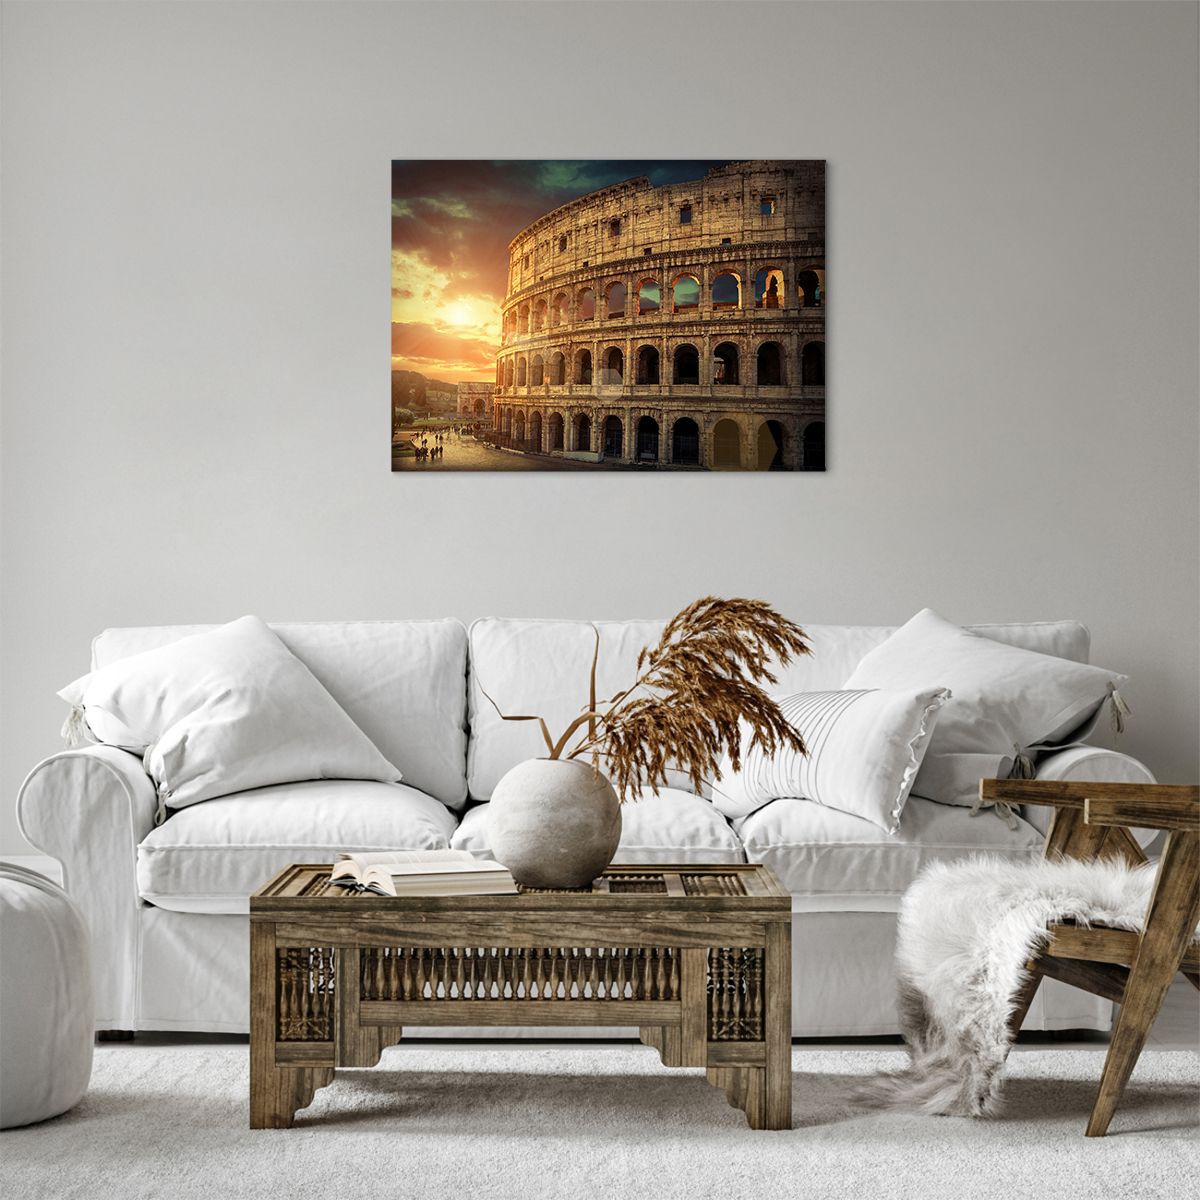 Quadro su tela Colosseo, Quadro su tela Roma, Quadro su tela Architettura, Quadro su tela Italia, Quadro su tela Cultura